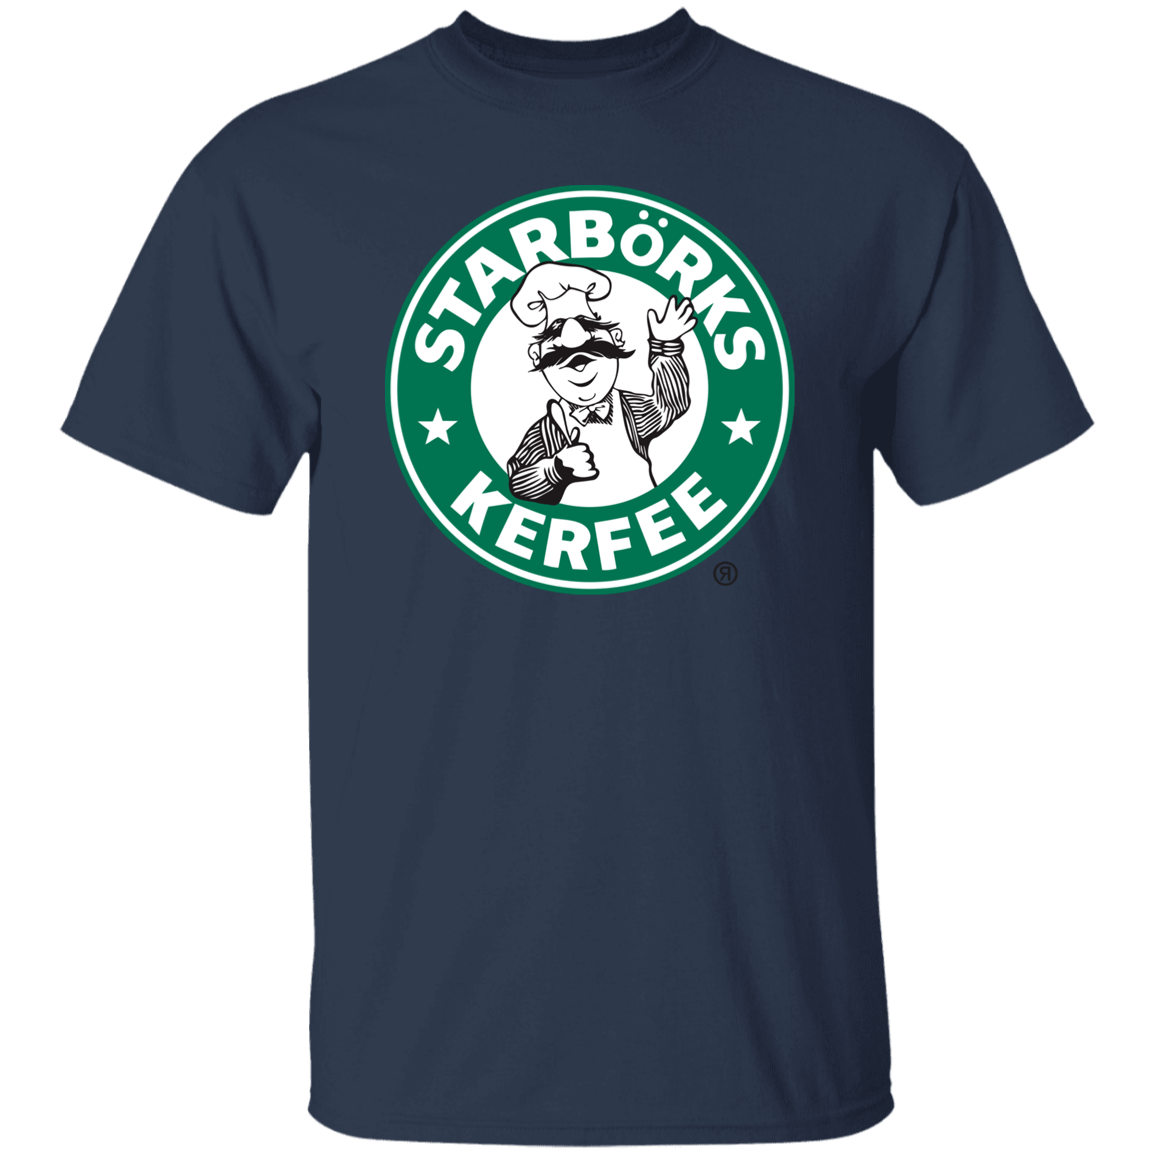 T-Shirts Navy / S Starborks Kerfee T-Shirt